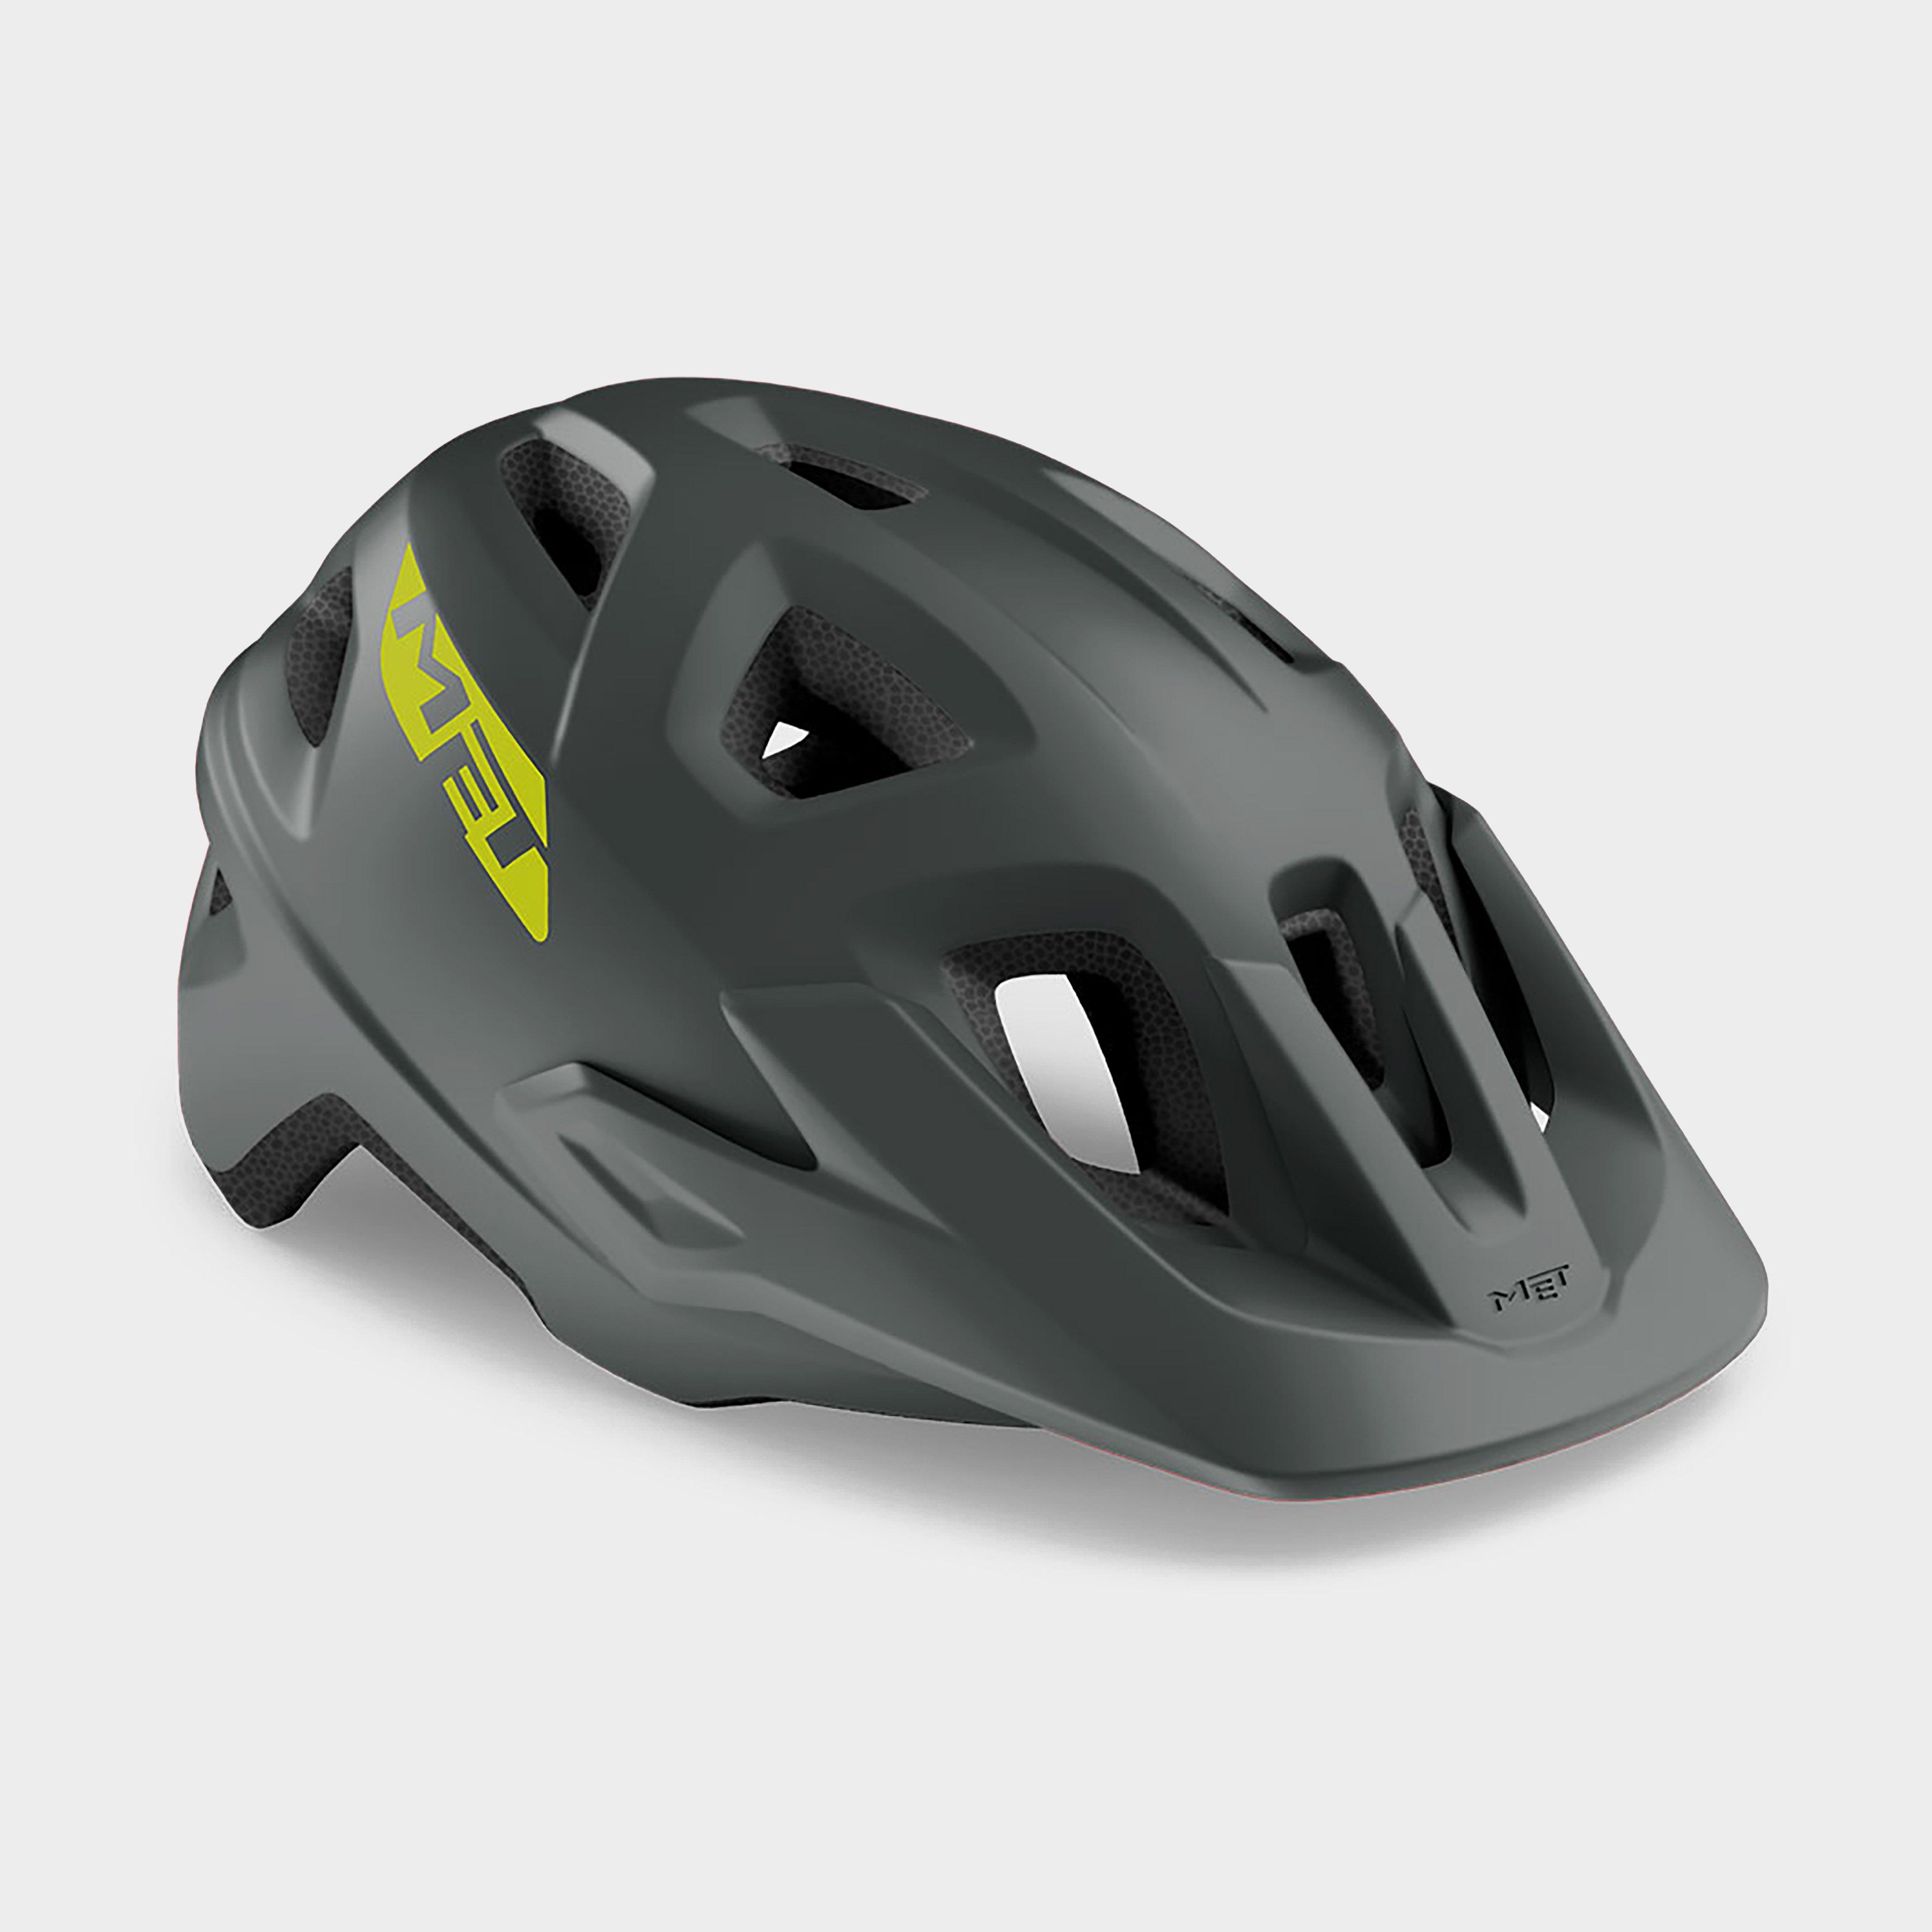 Met Met Echo Bicycle Helmet (grey) - Grey/grey  Grey/grey